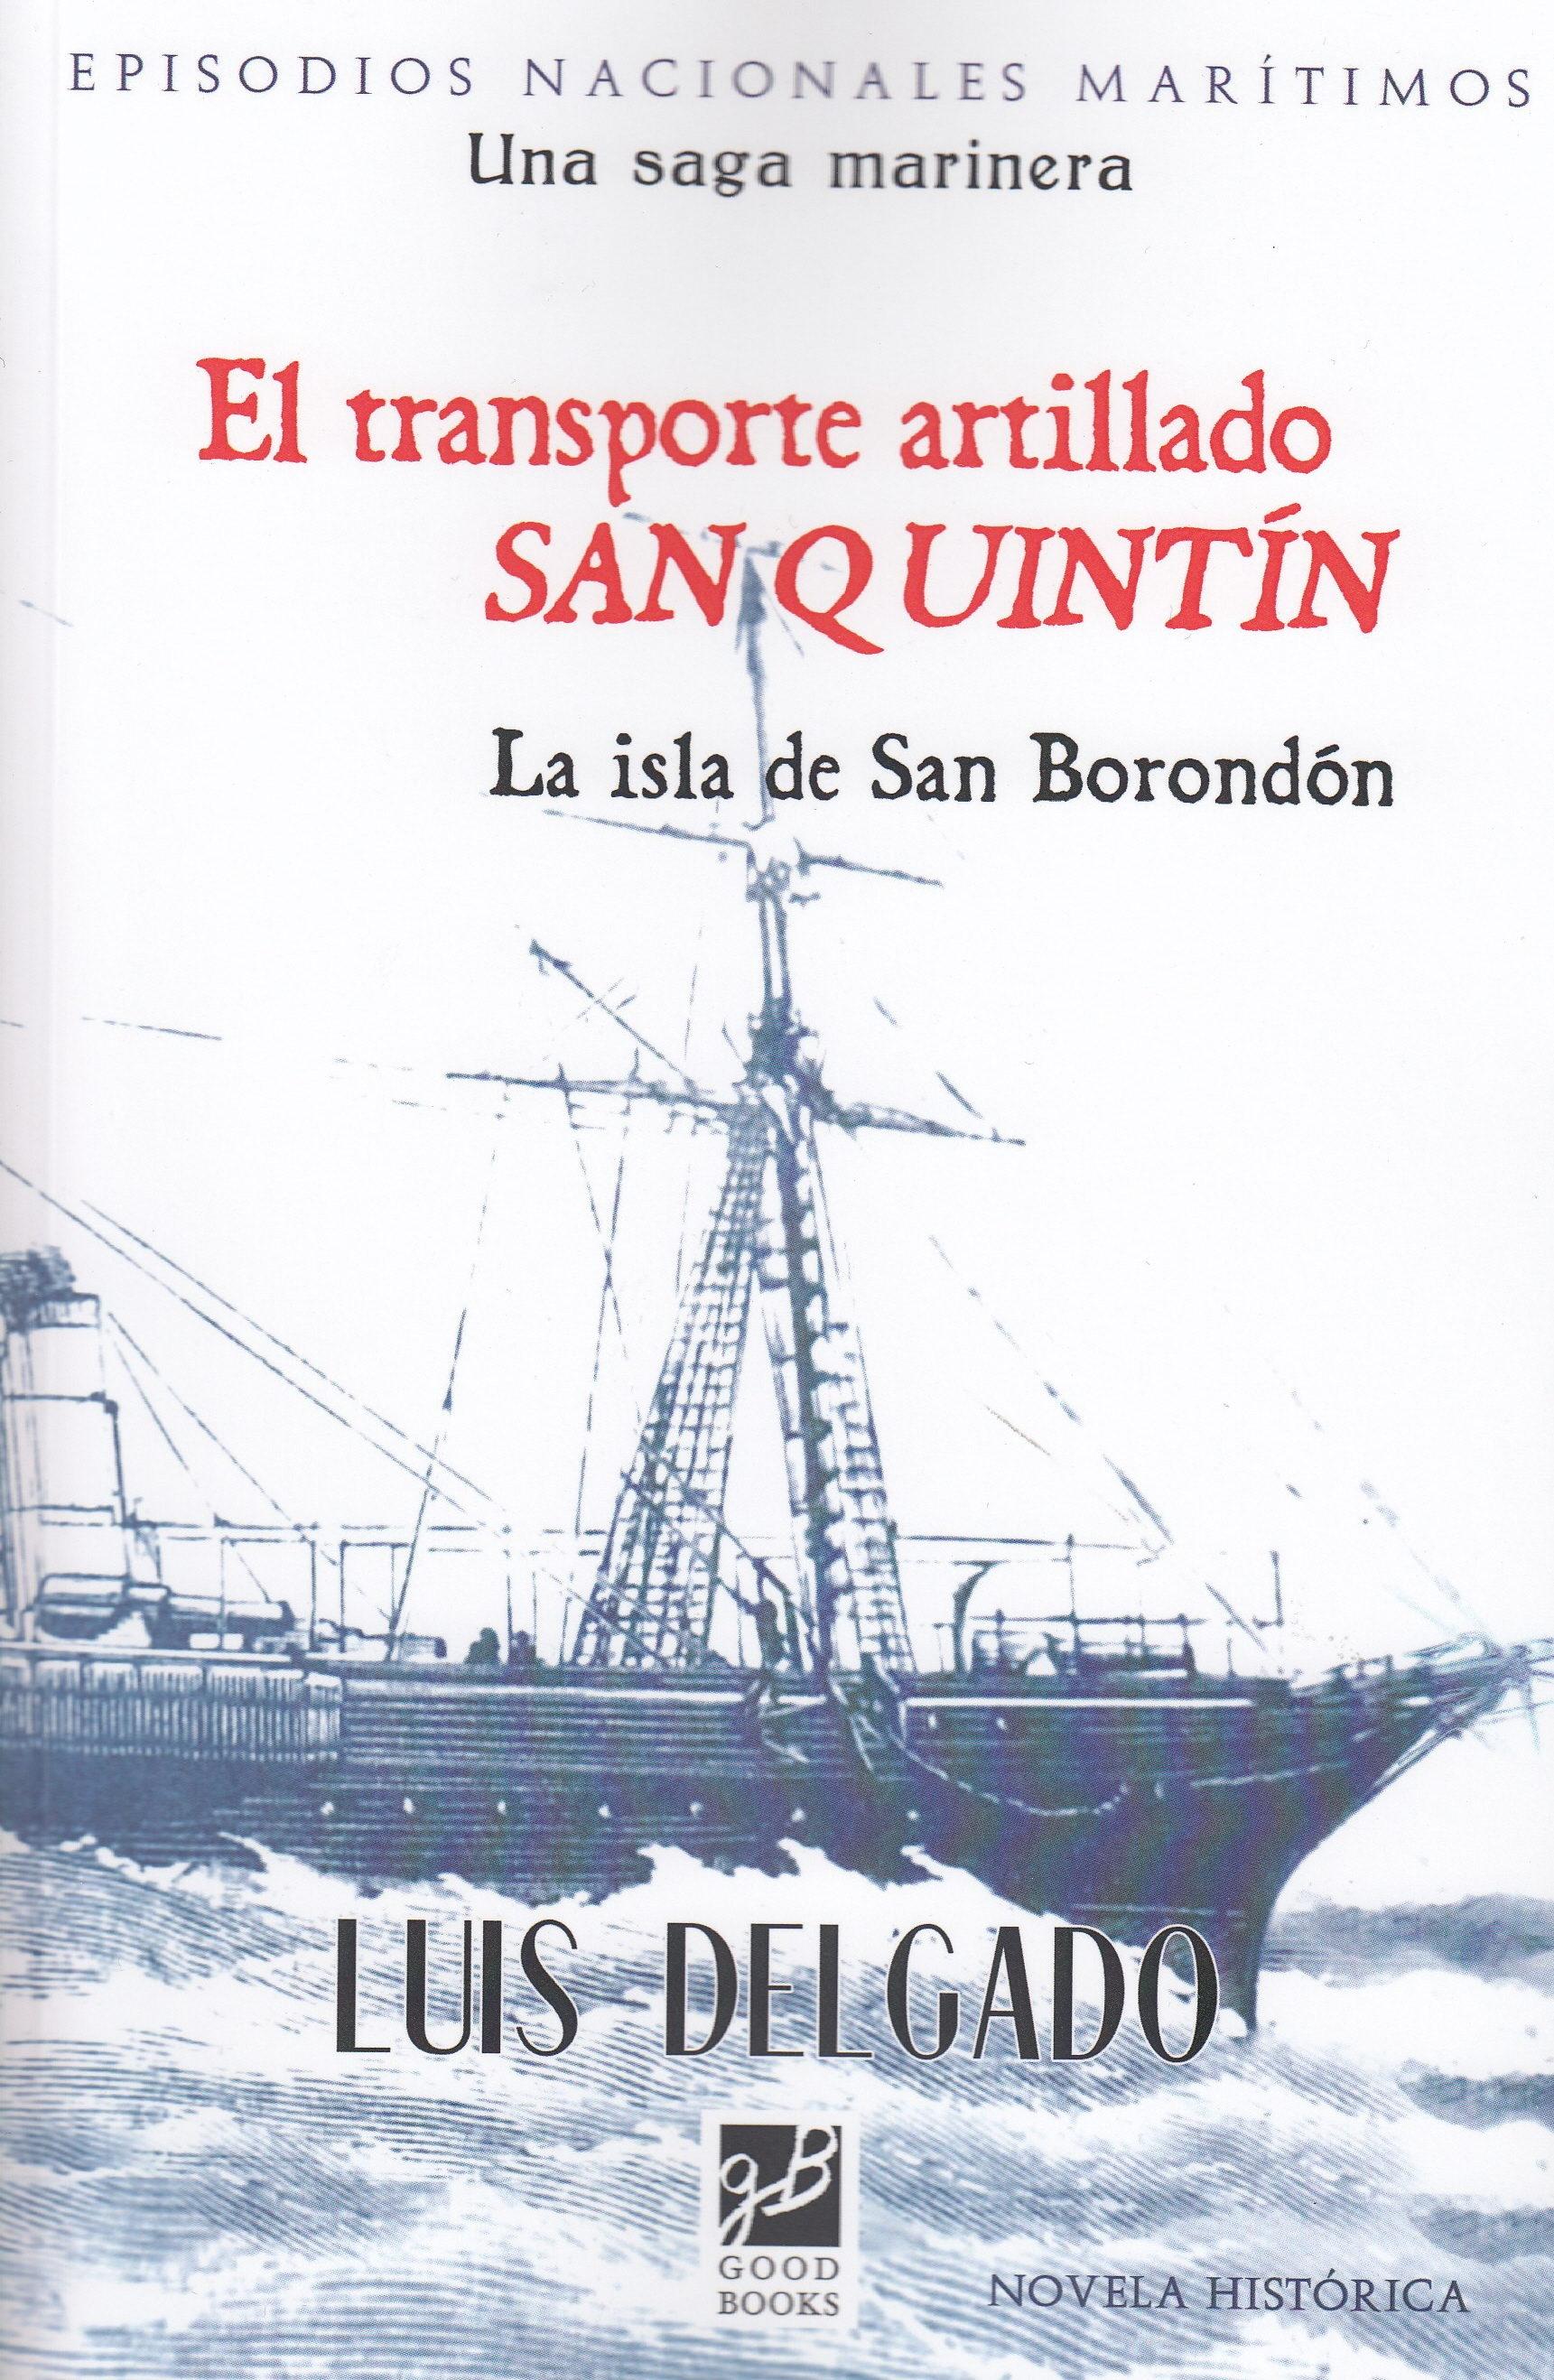 El transporte artillado San Quintin "La isla de San Borondón". 